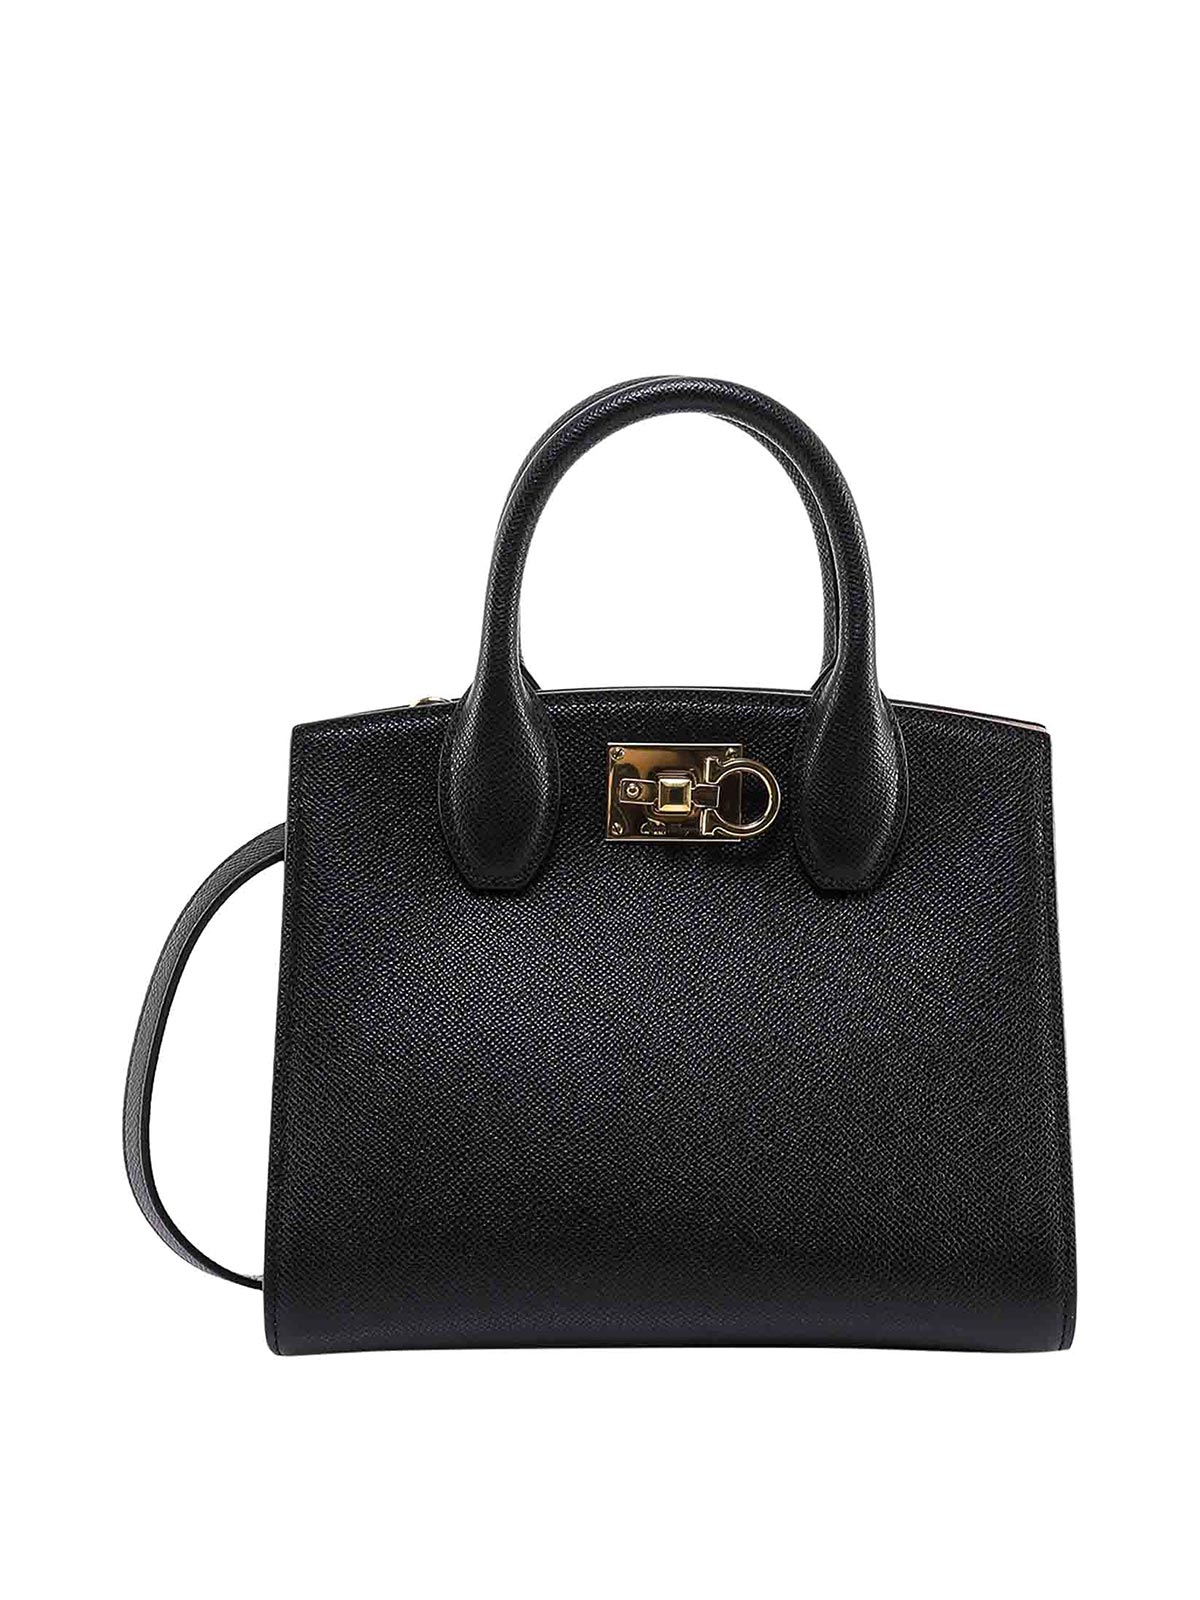 Ferragamo Leather Handbag With Metal Gancini Detail In Black